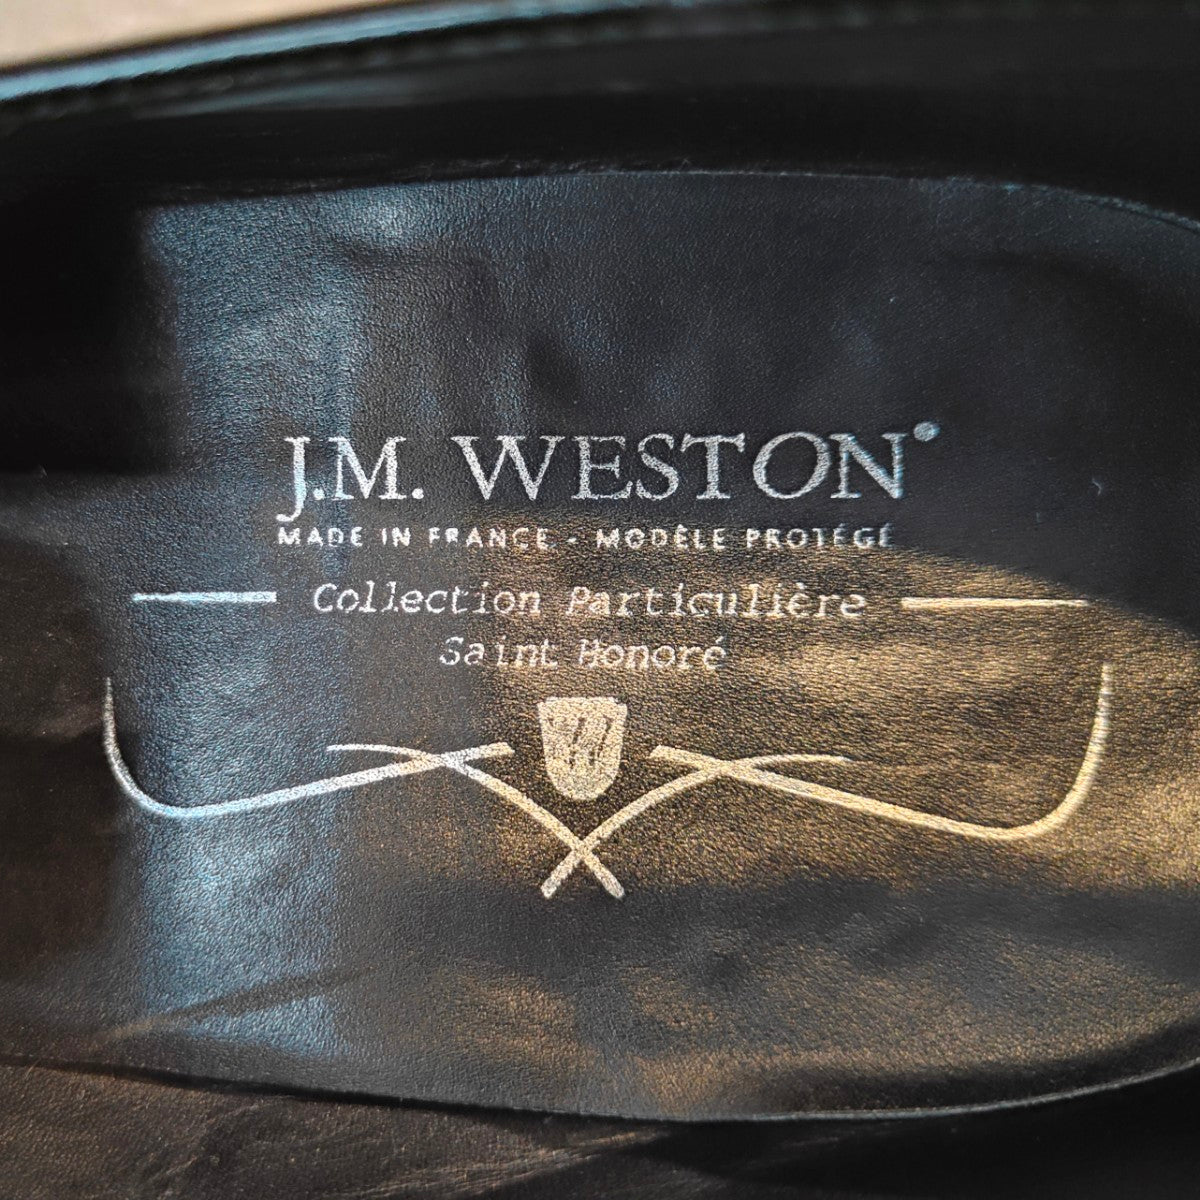 【J.M.WESTON】ジェイエムウエストン  シグニチャーローファー180 サントノーレコレクション ネイビー×ブラック  7.5D